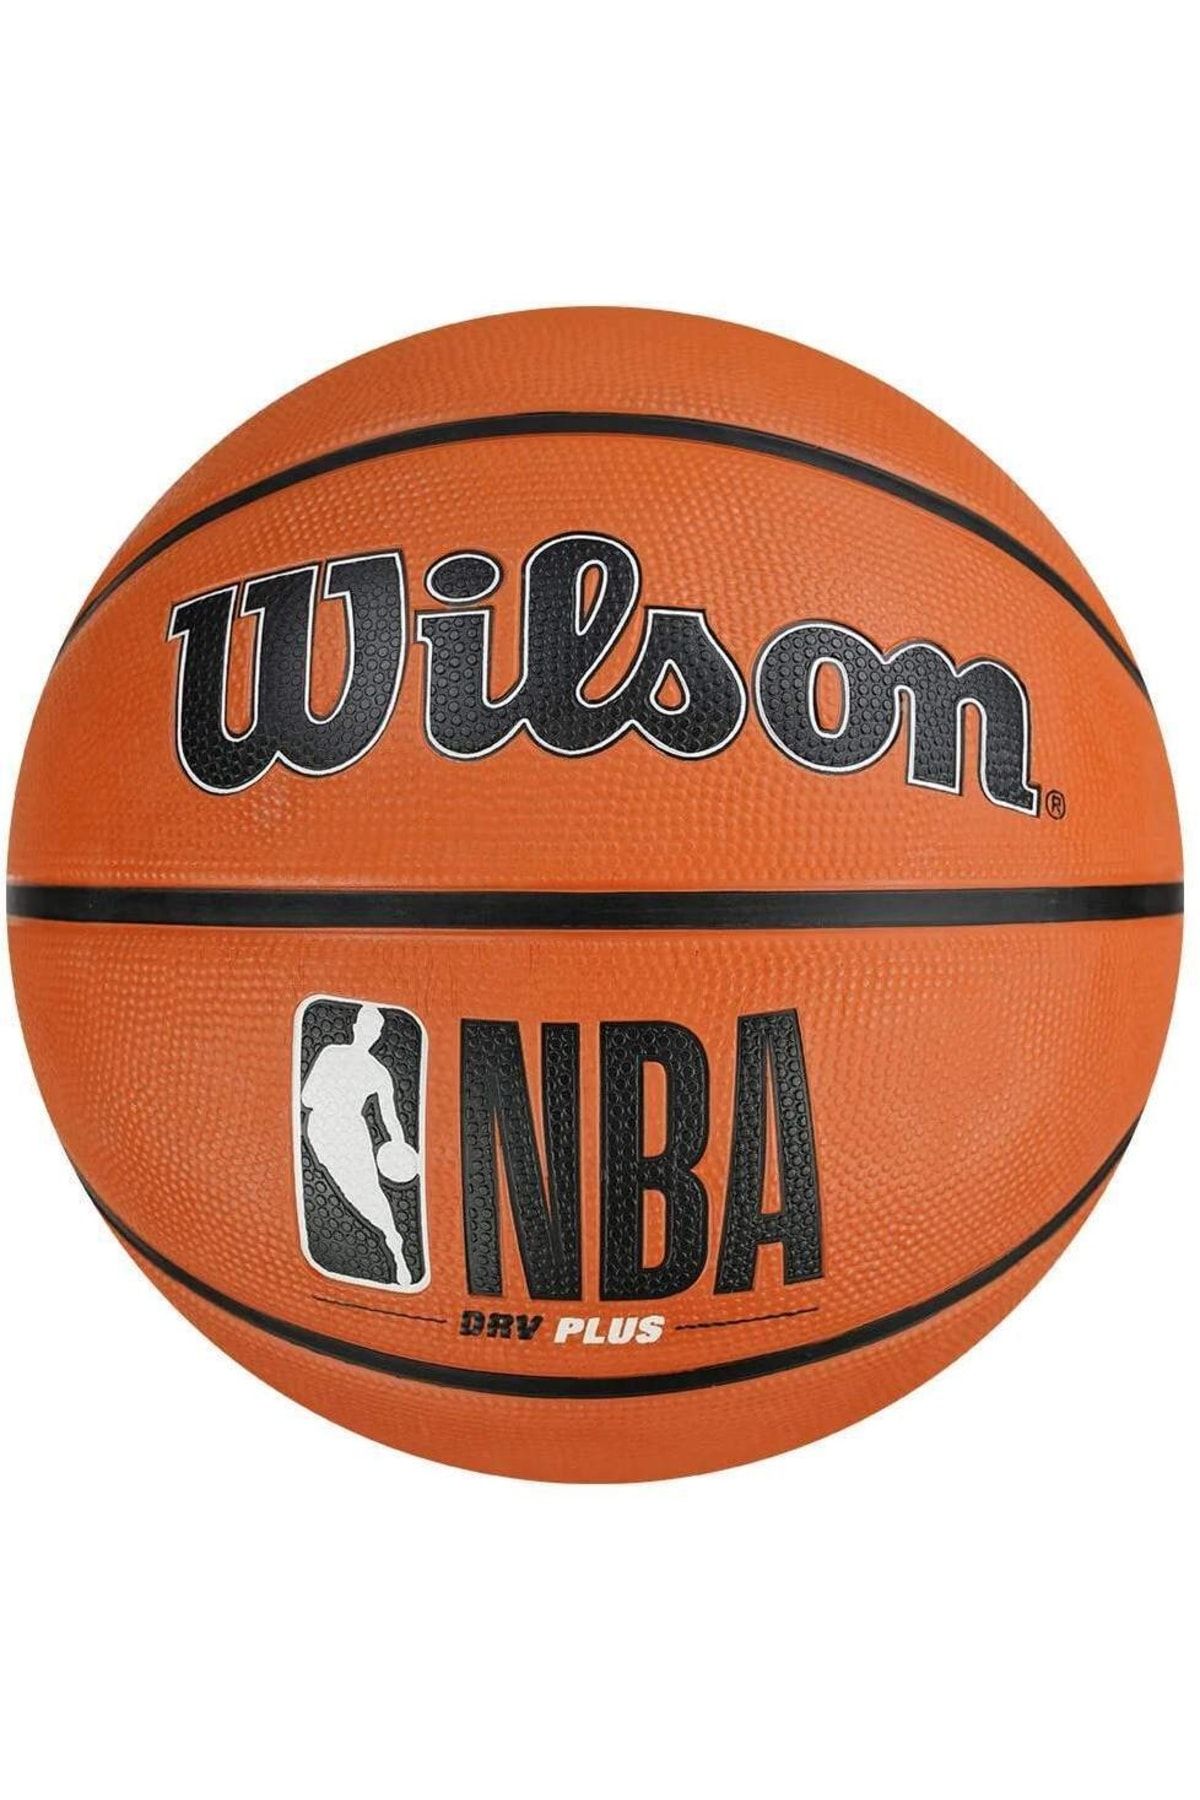 Wilson Nba Drv Plus Basketbol Topu Size 5 (wtb9200x)